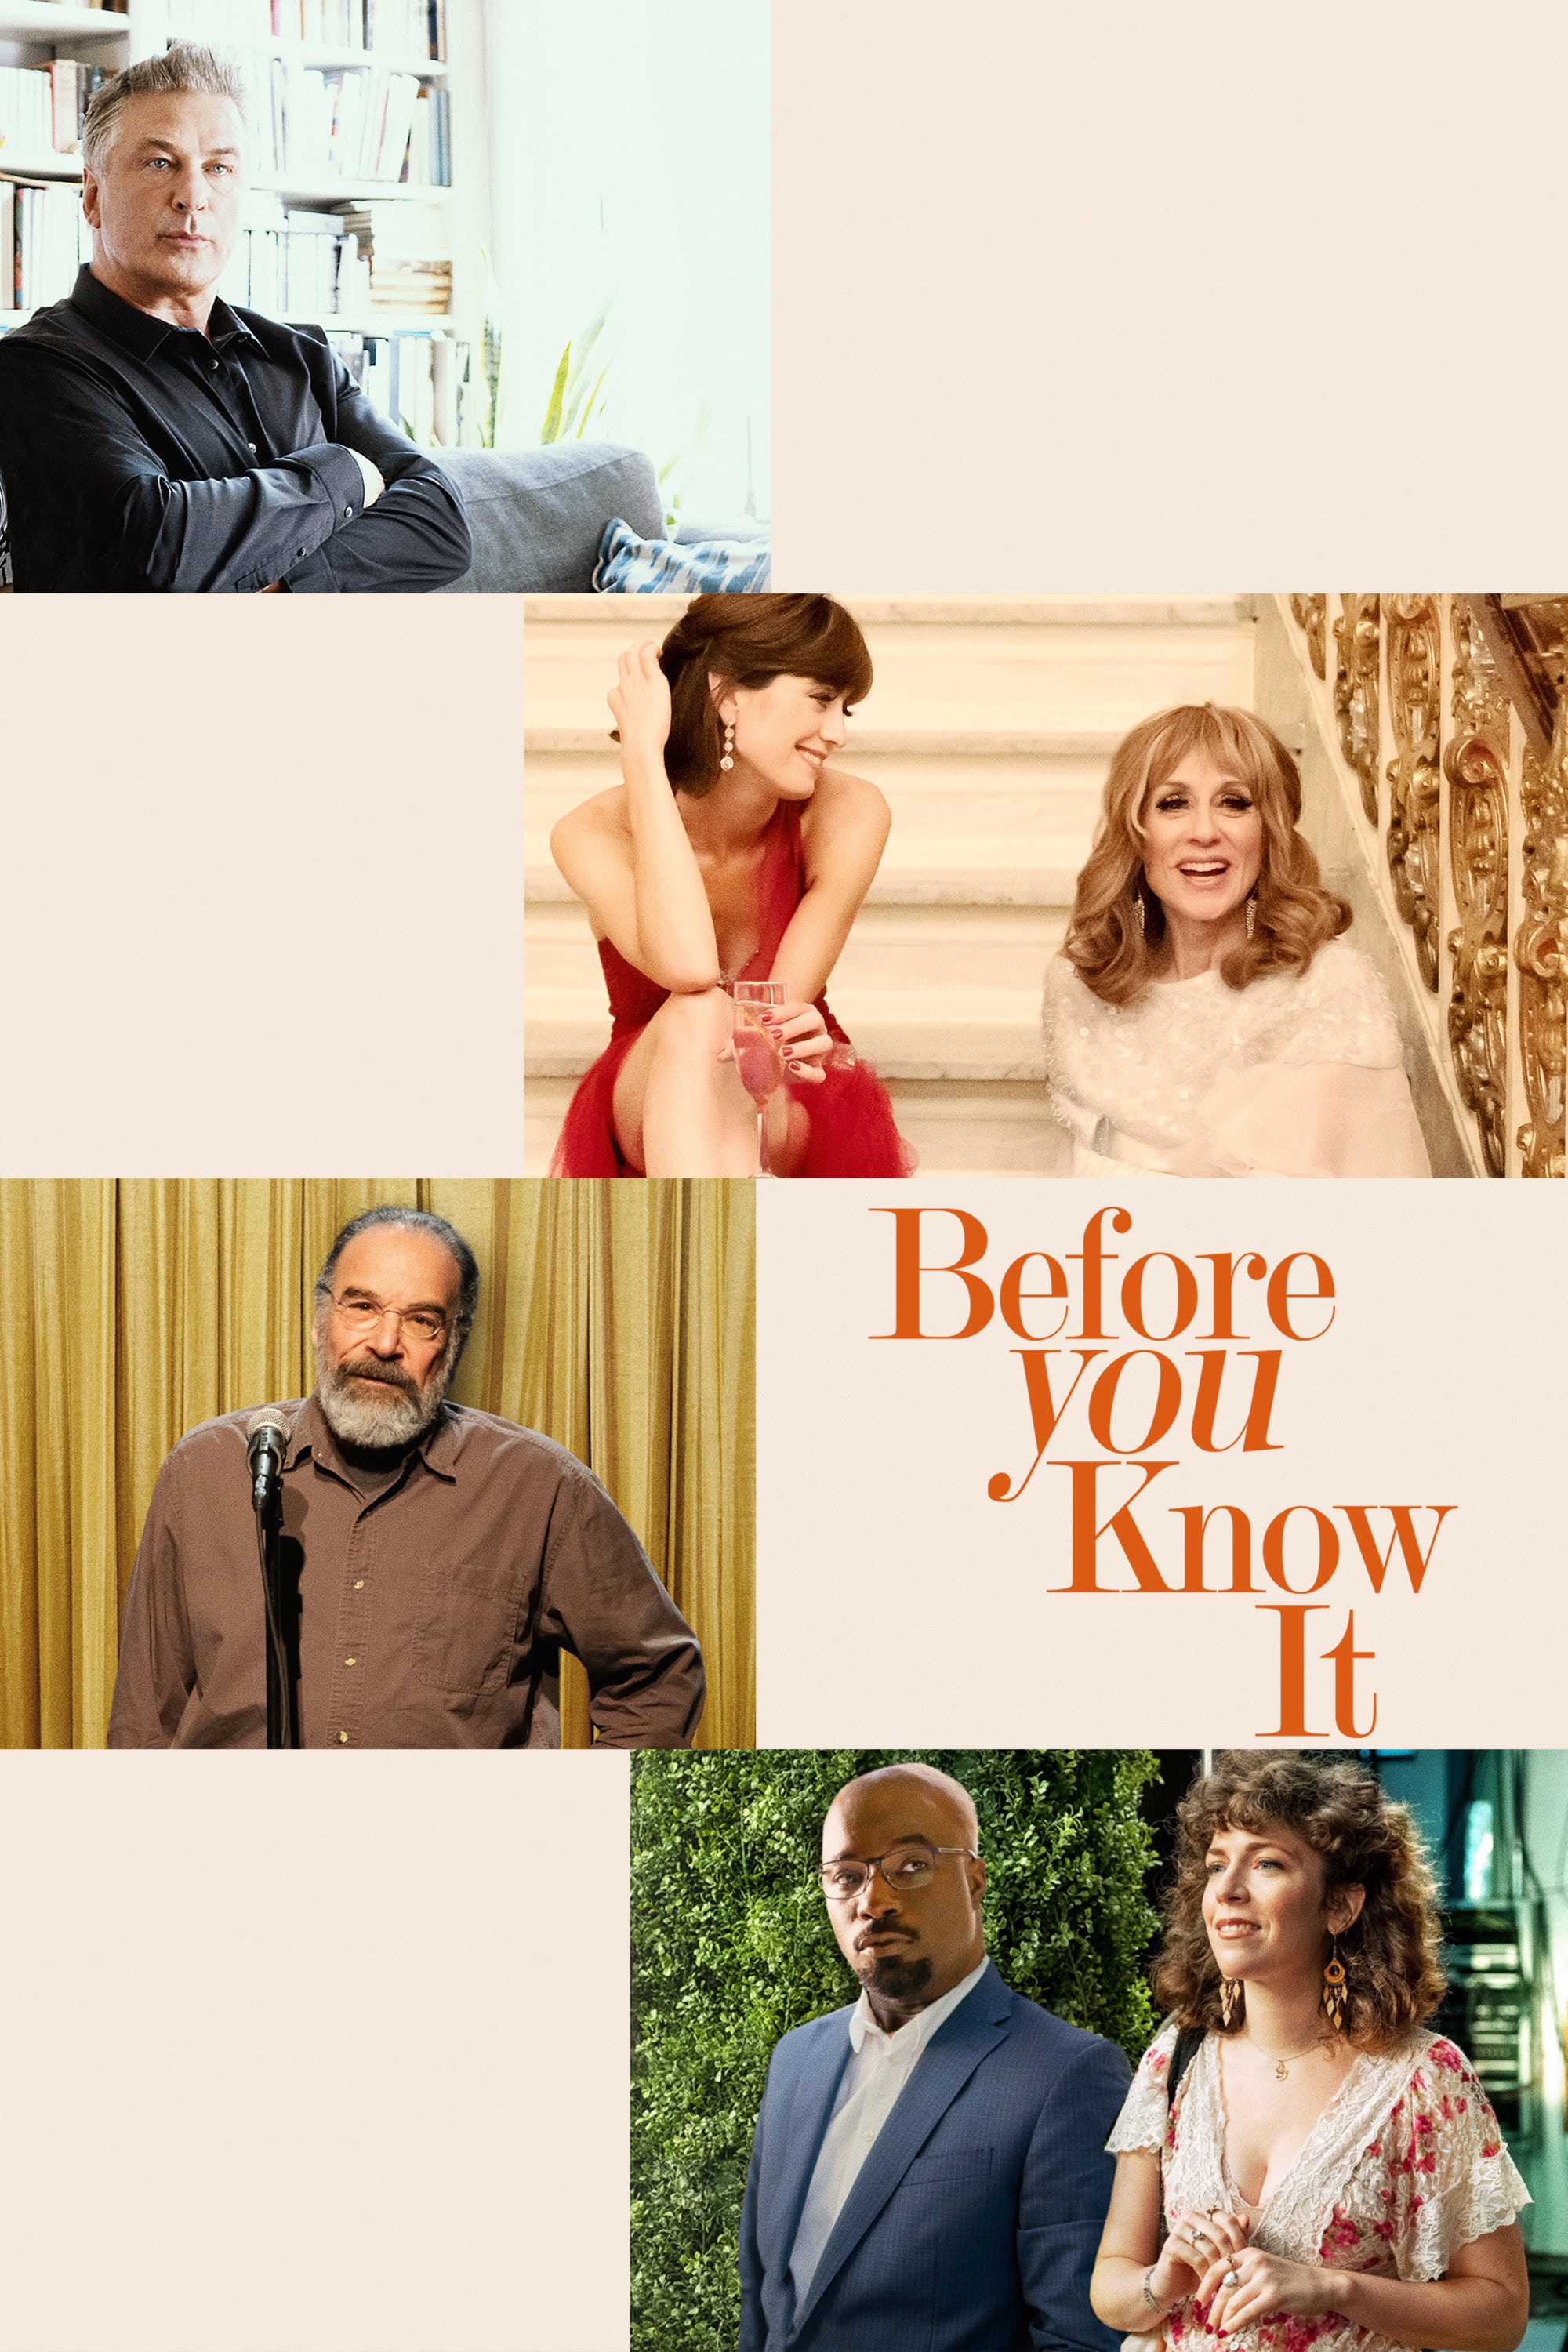 Plakat von "Before You Know It"